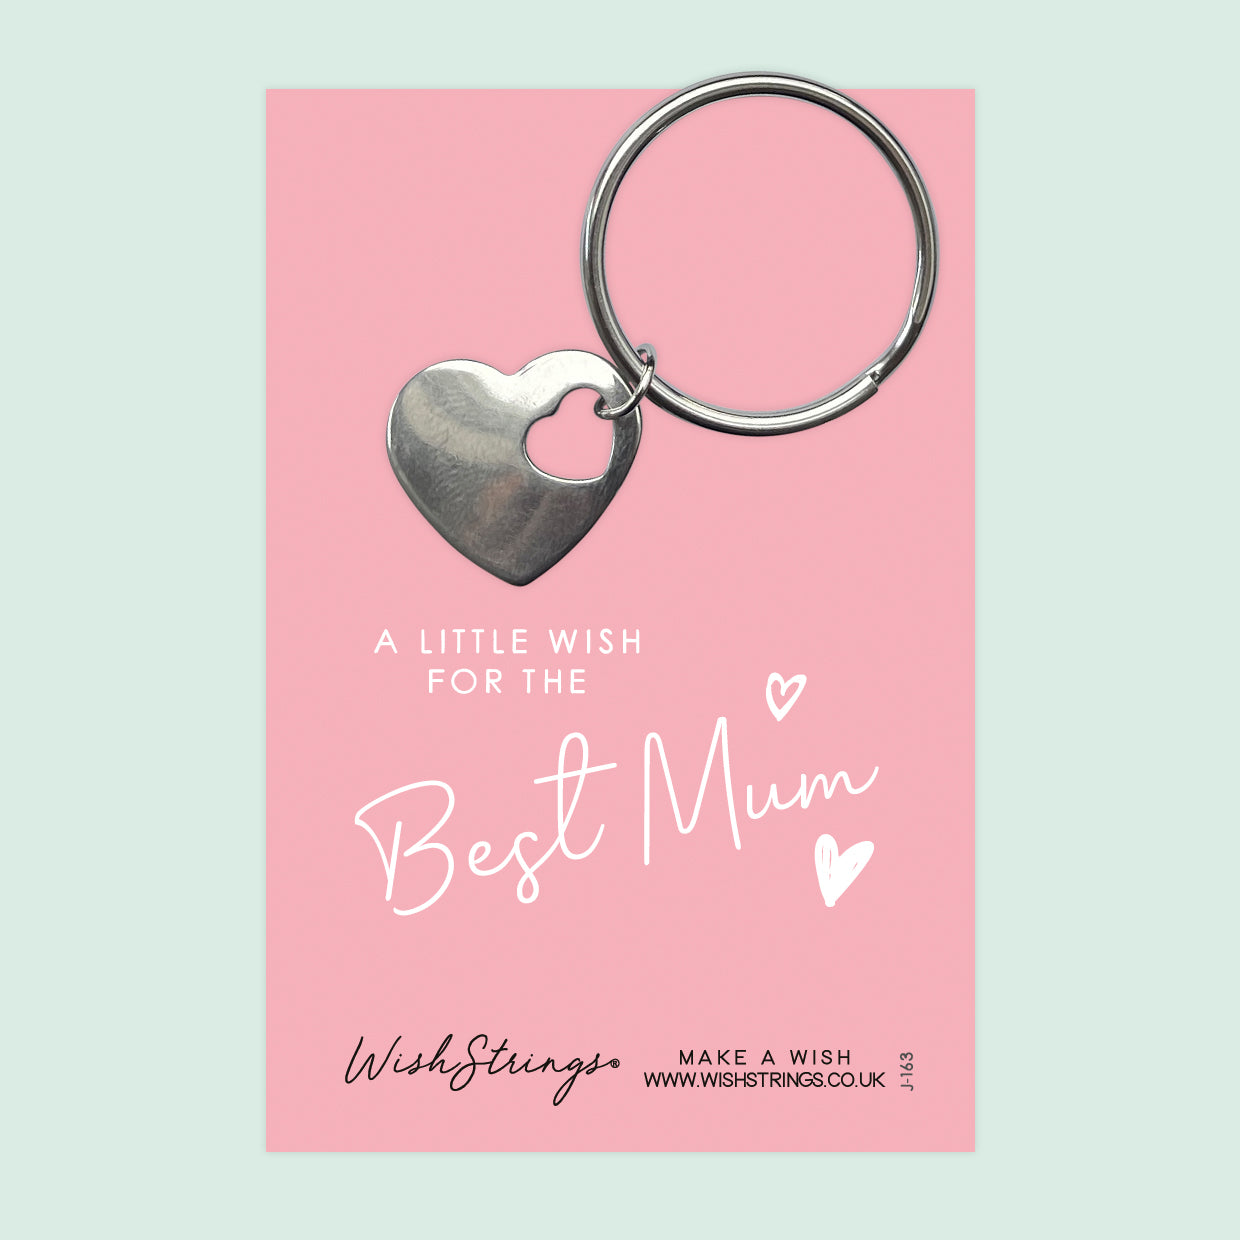 Best Mum - Heart Keyring